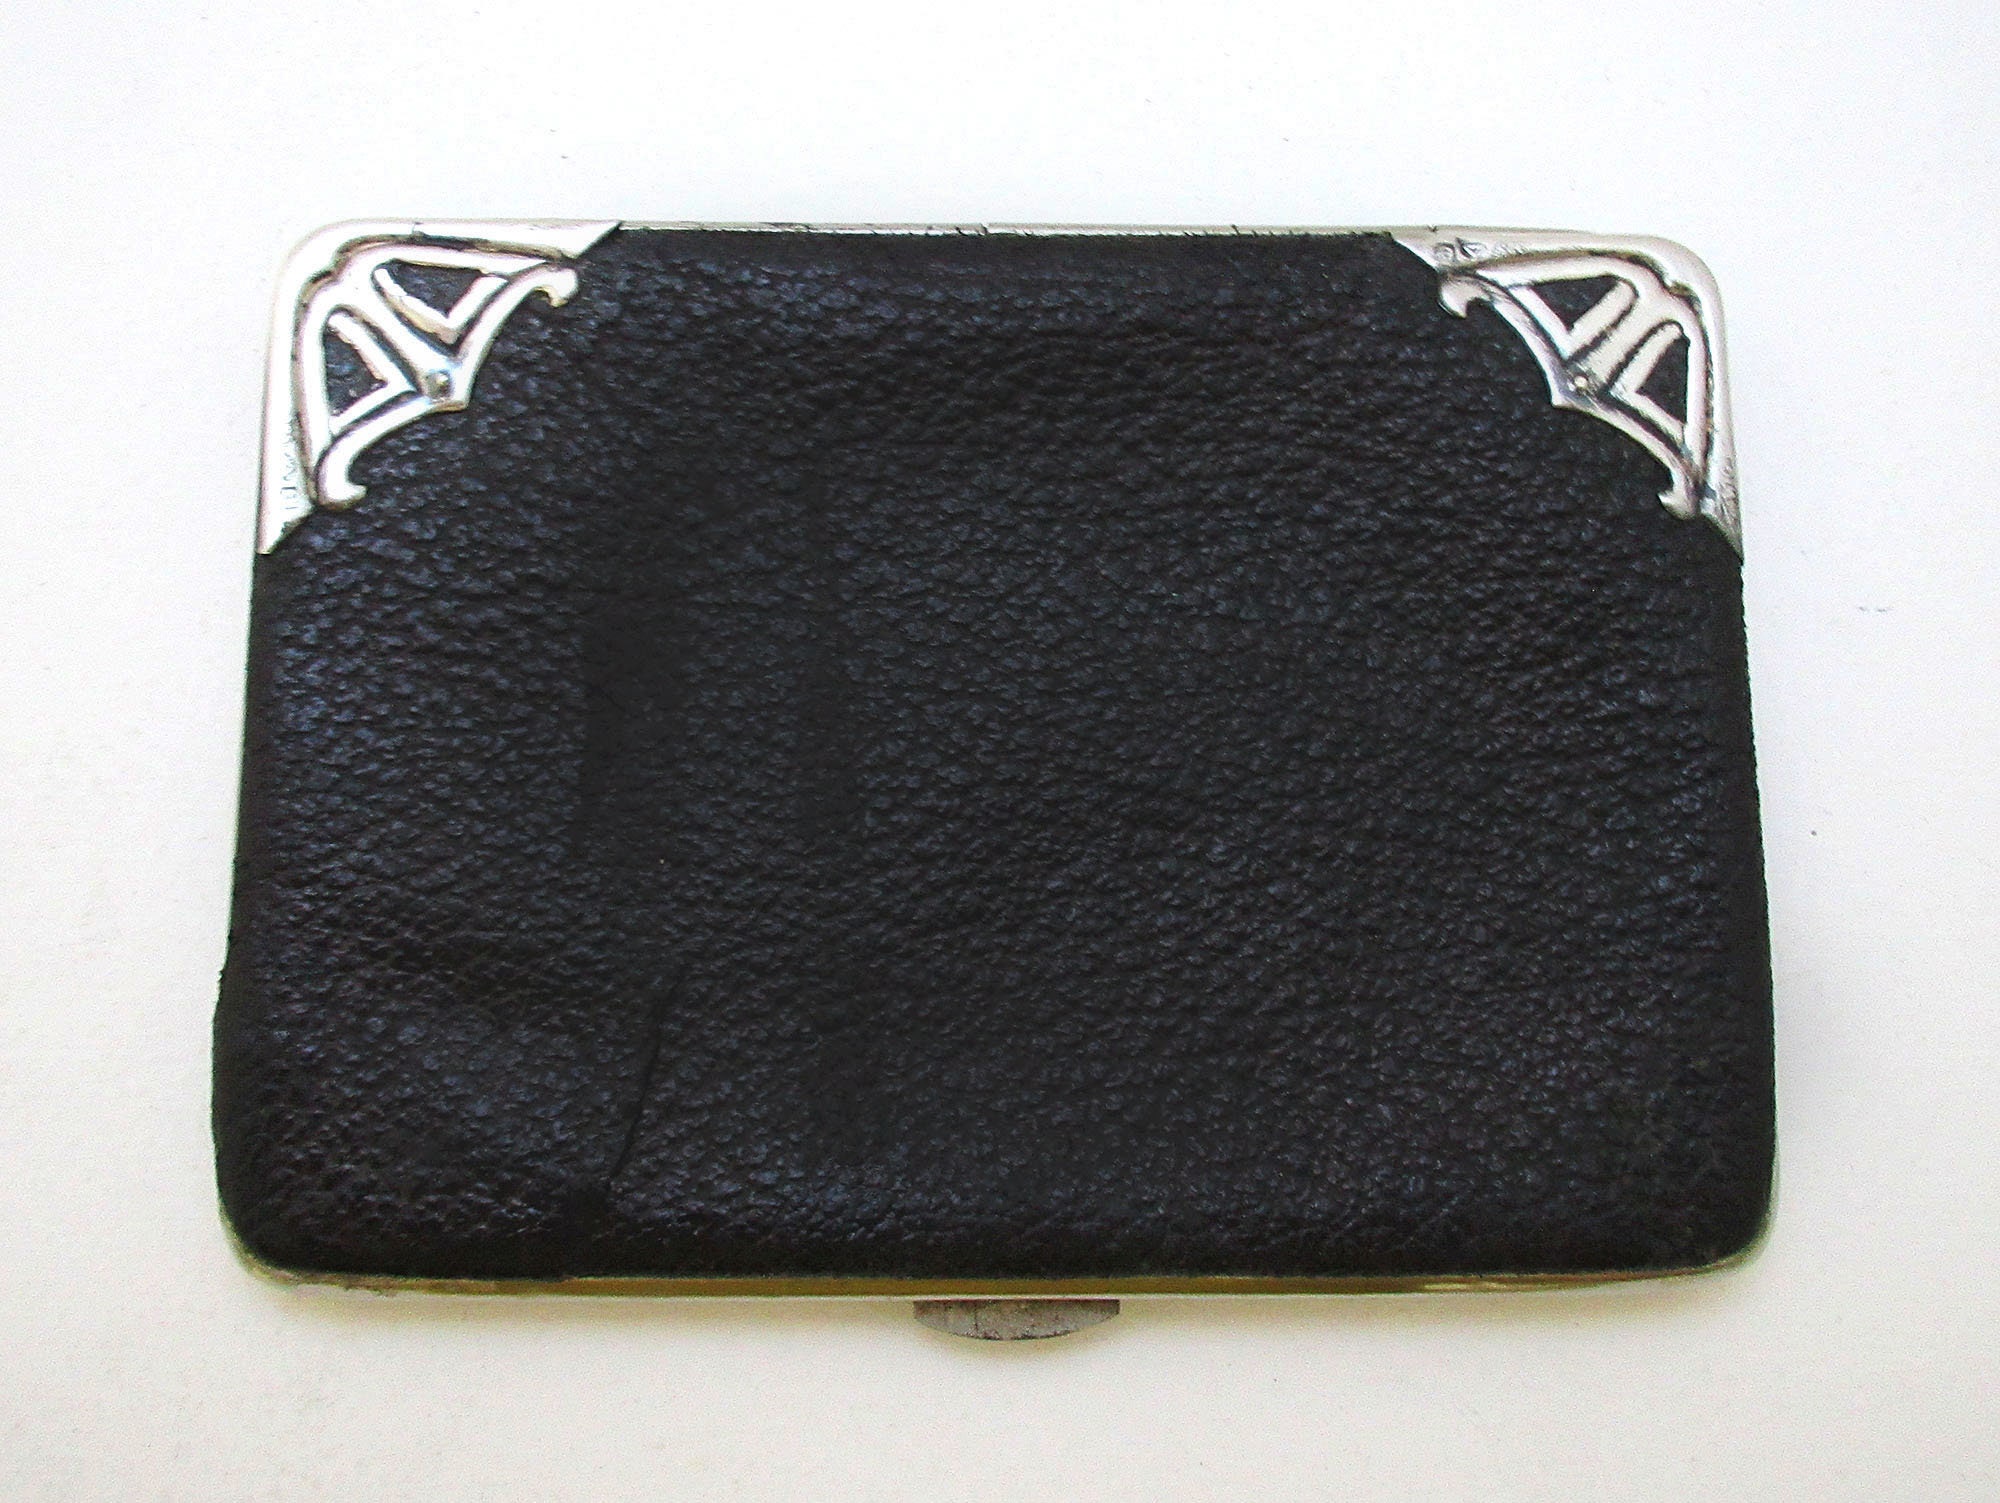 Vintage 1904 Edwardian Victorian Handbag, Brass Clasp and Textured Leather Purse, Hand Held Leather Handbag